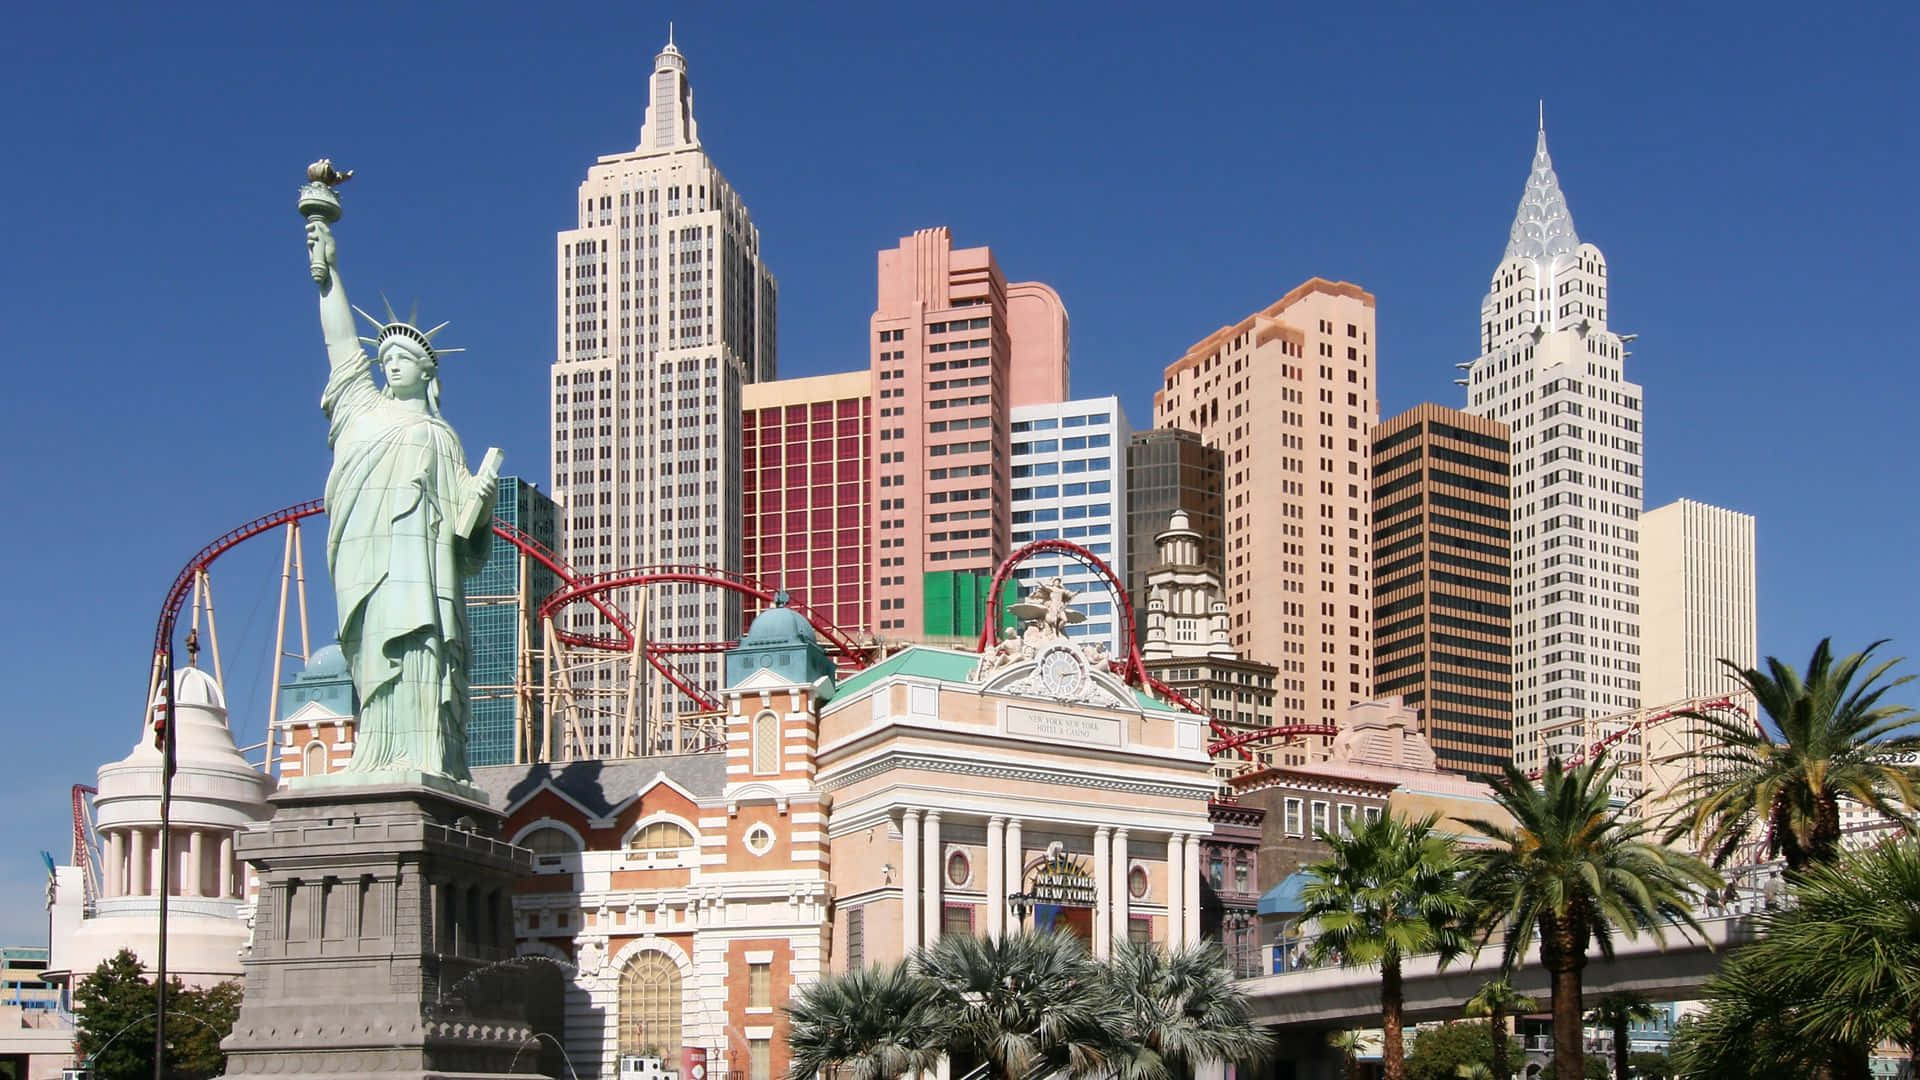 Statue of Liberty Las Vegas Picture